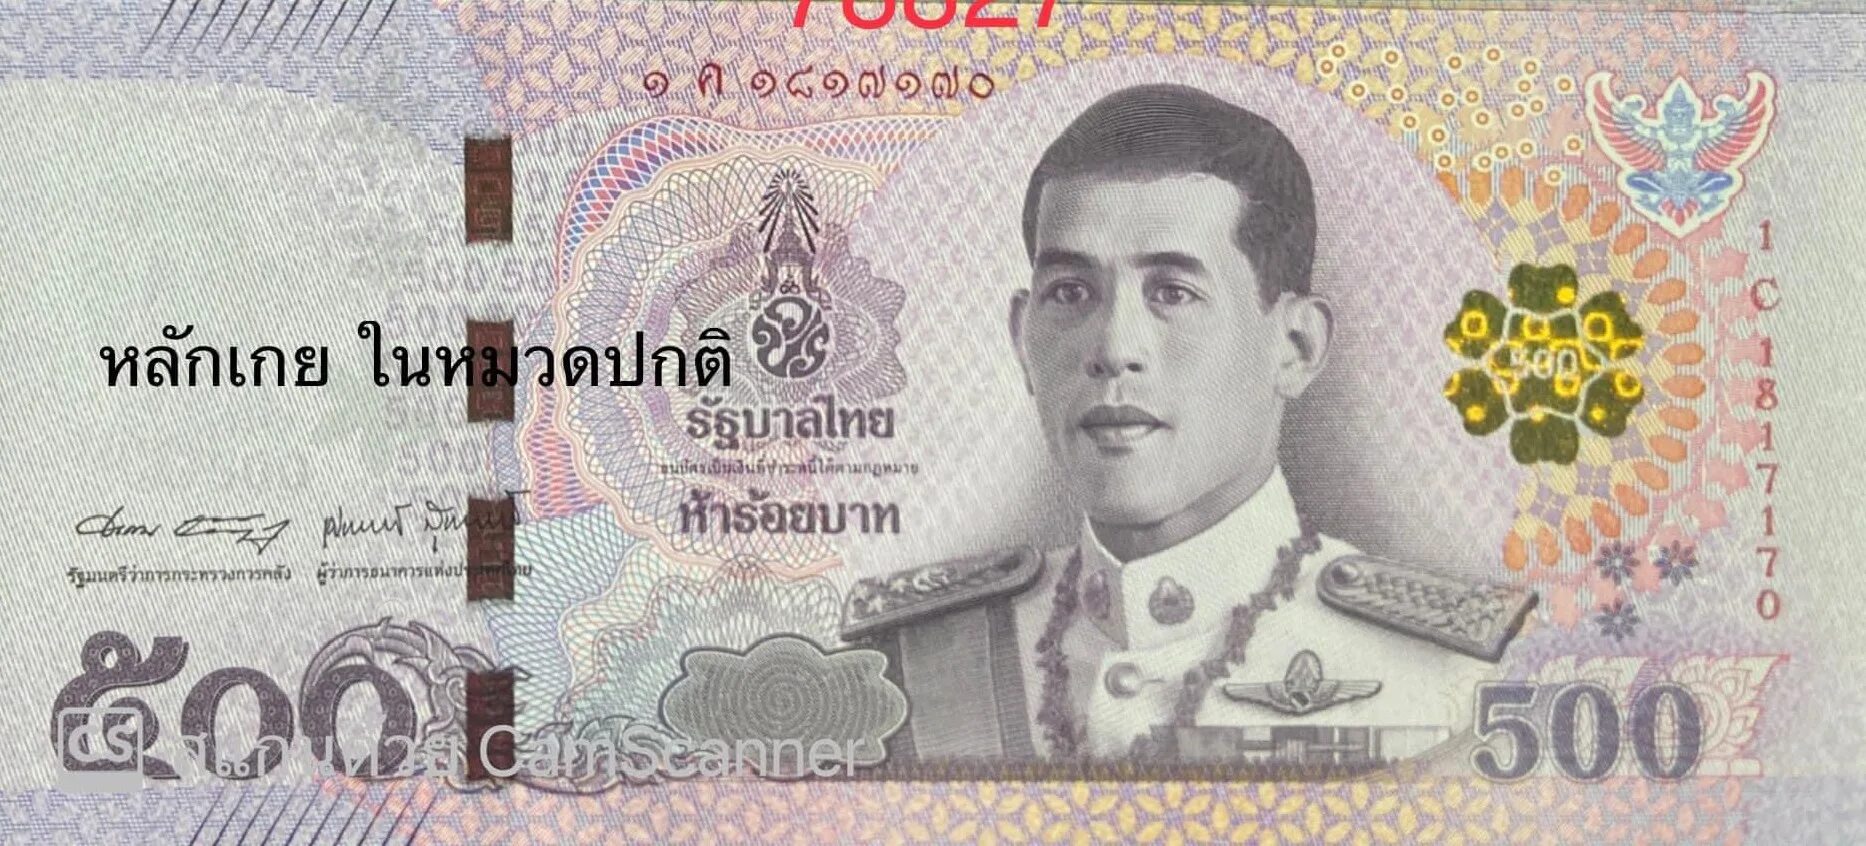 Банкноты Таиланда 500 бат. Тайланд банкнота 500 бат. Купюра 500 бат. Тайские купюры 500 Батов.